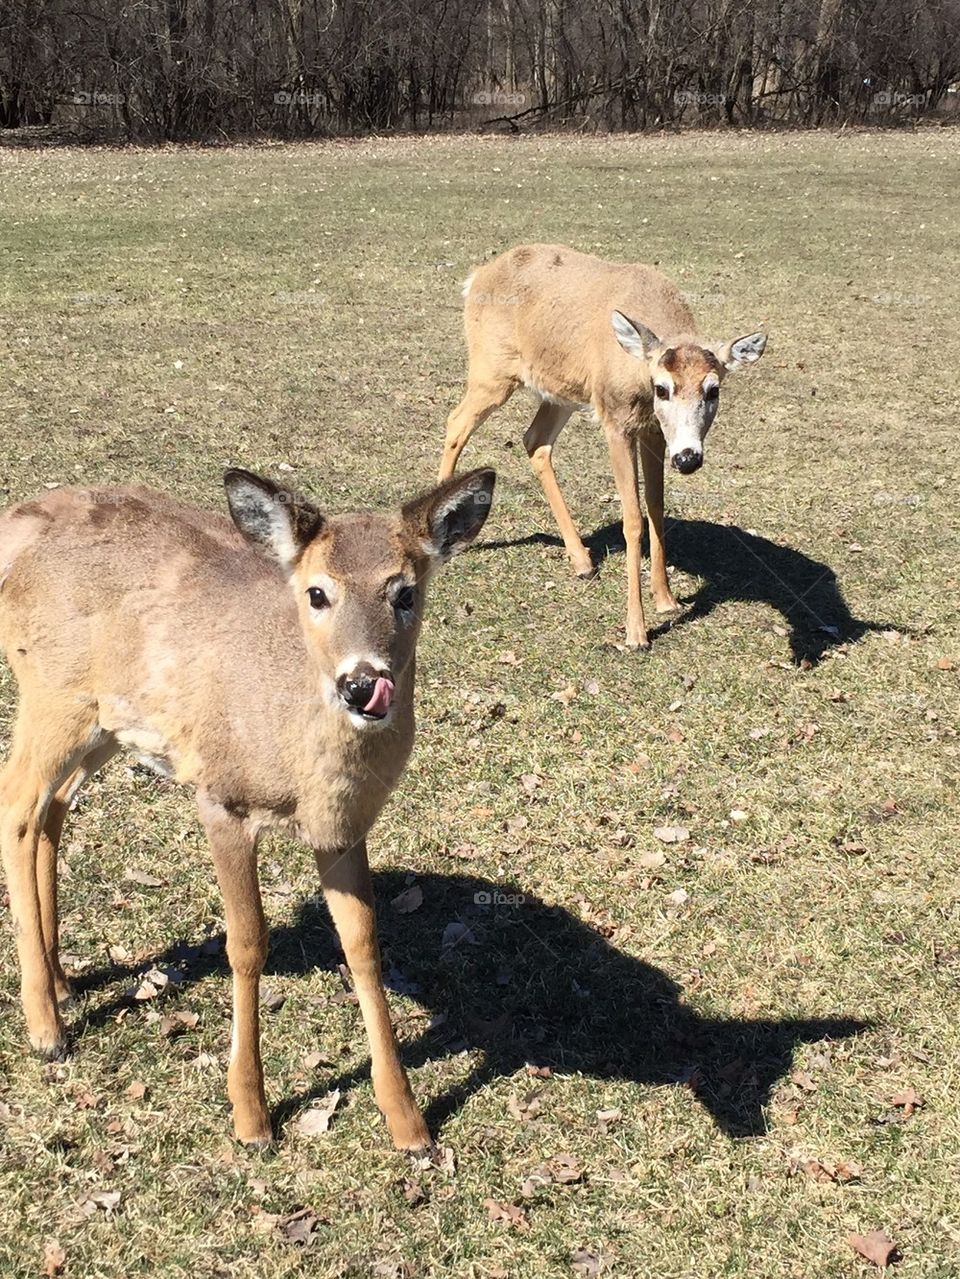 Deer in the park